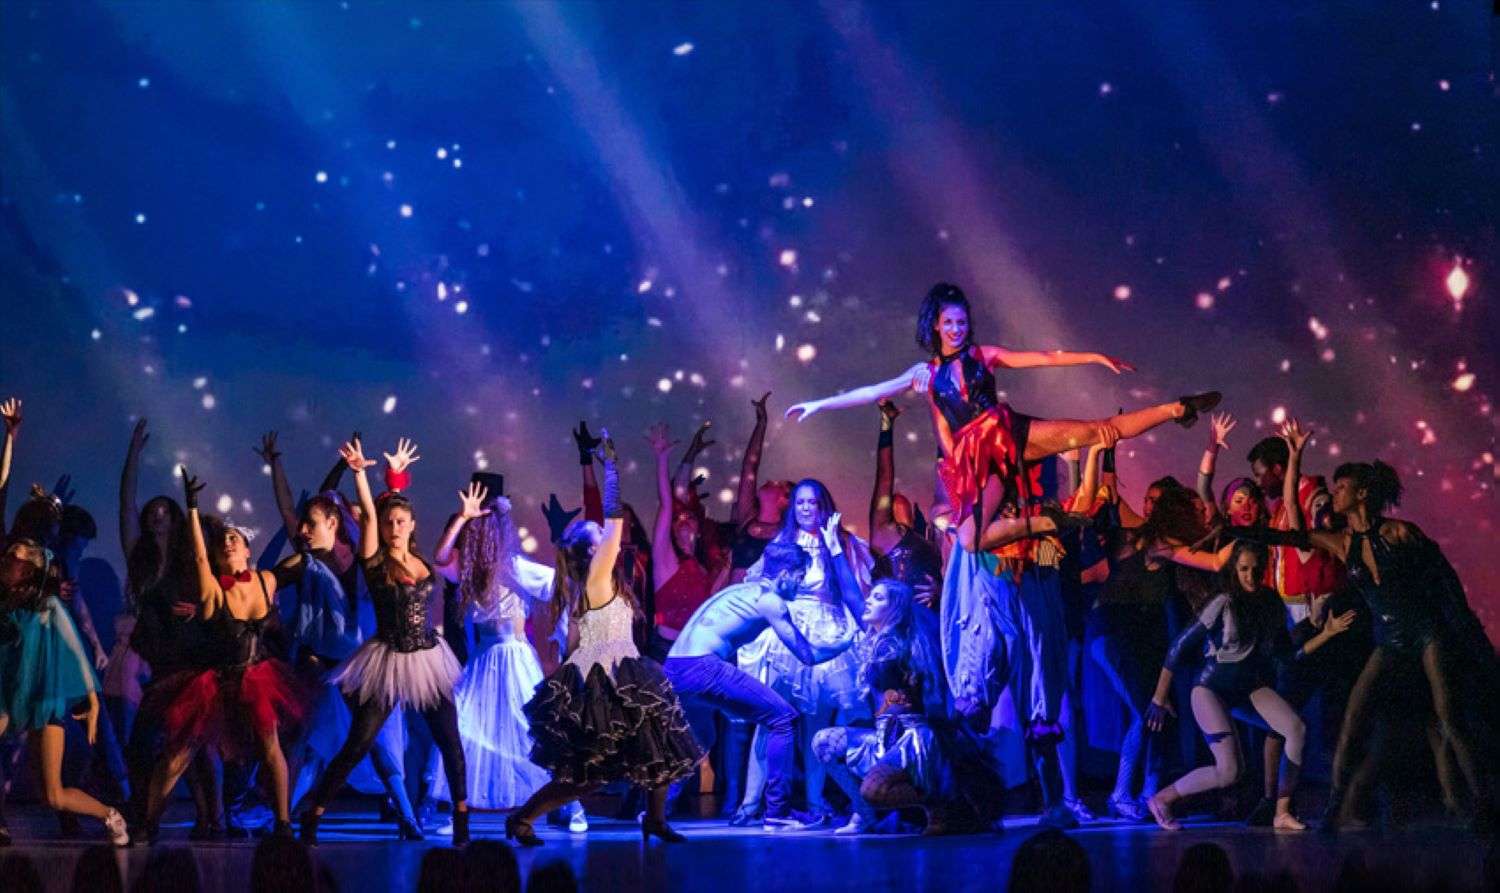 La Gypsy Musical Academy torna sul palco con “The Greatest Showman”